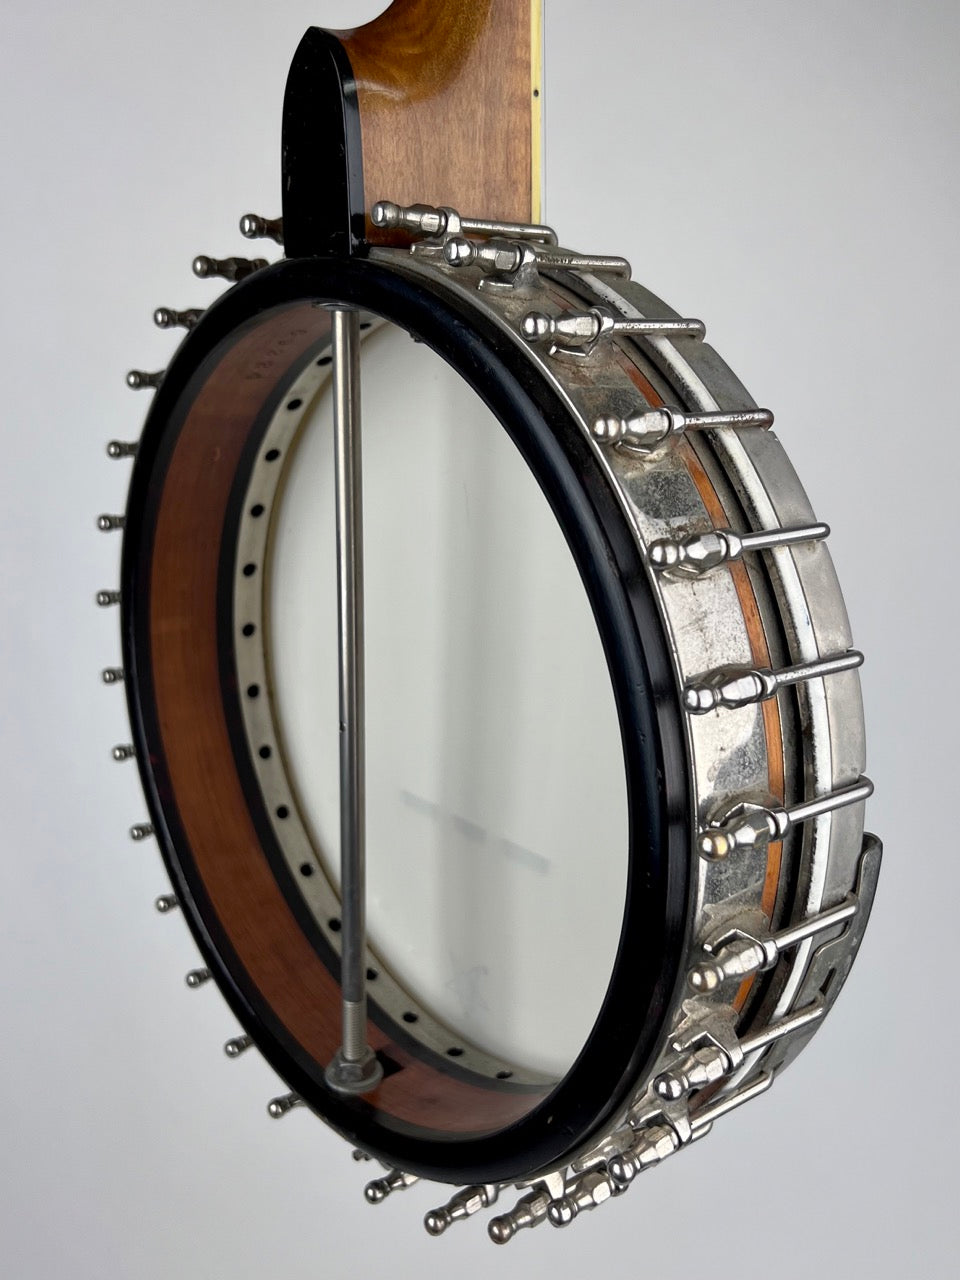 1924 Vega Tubaphone Conversion Banjo